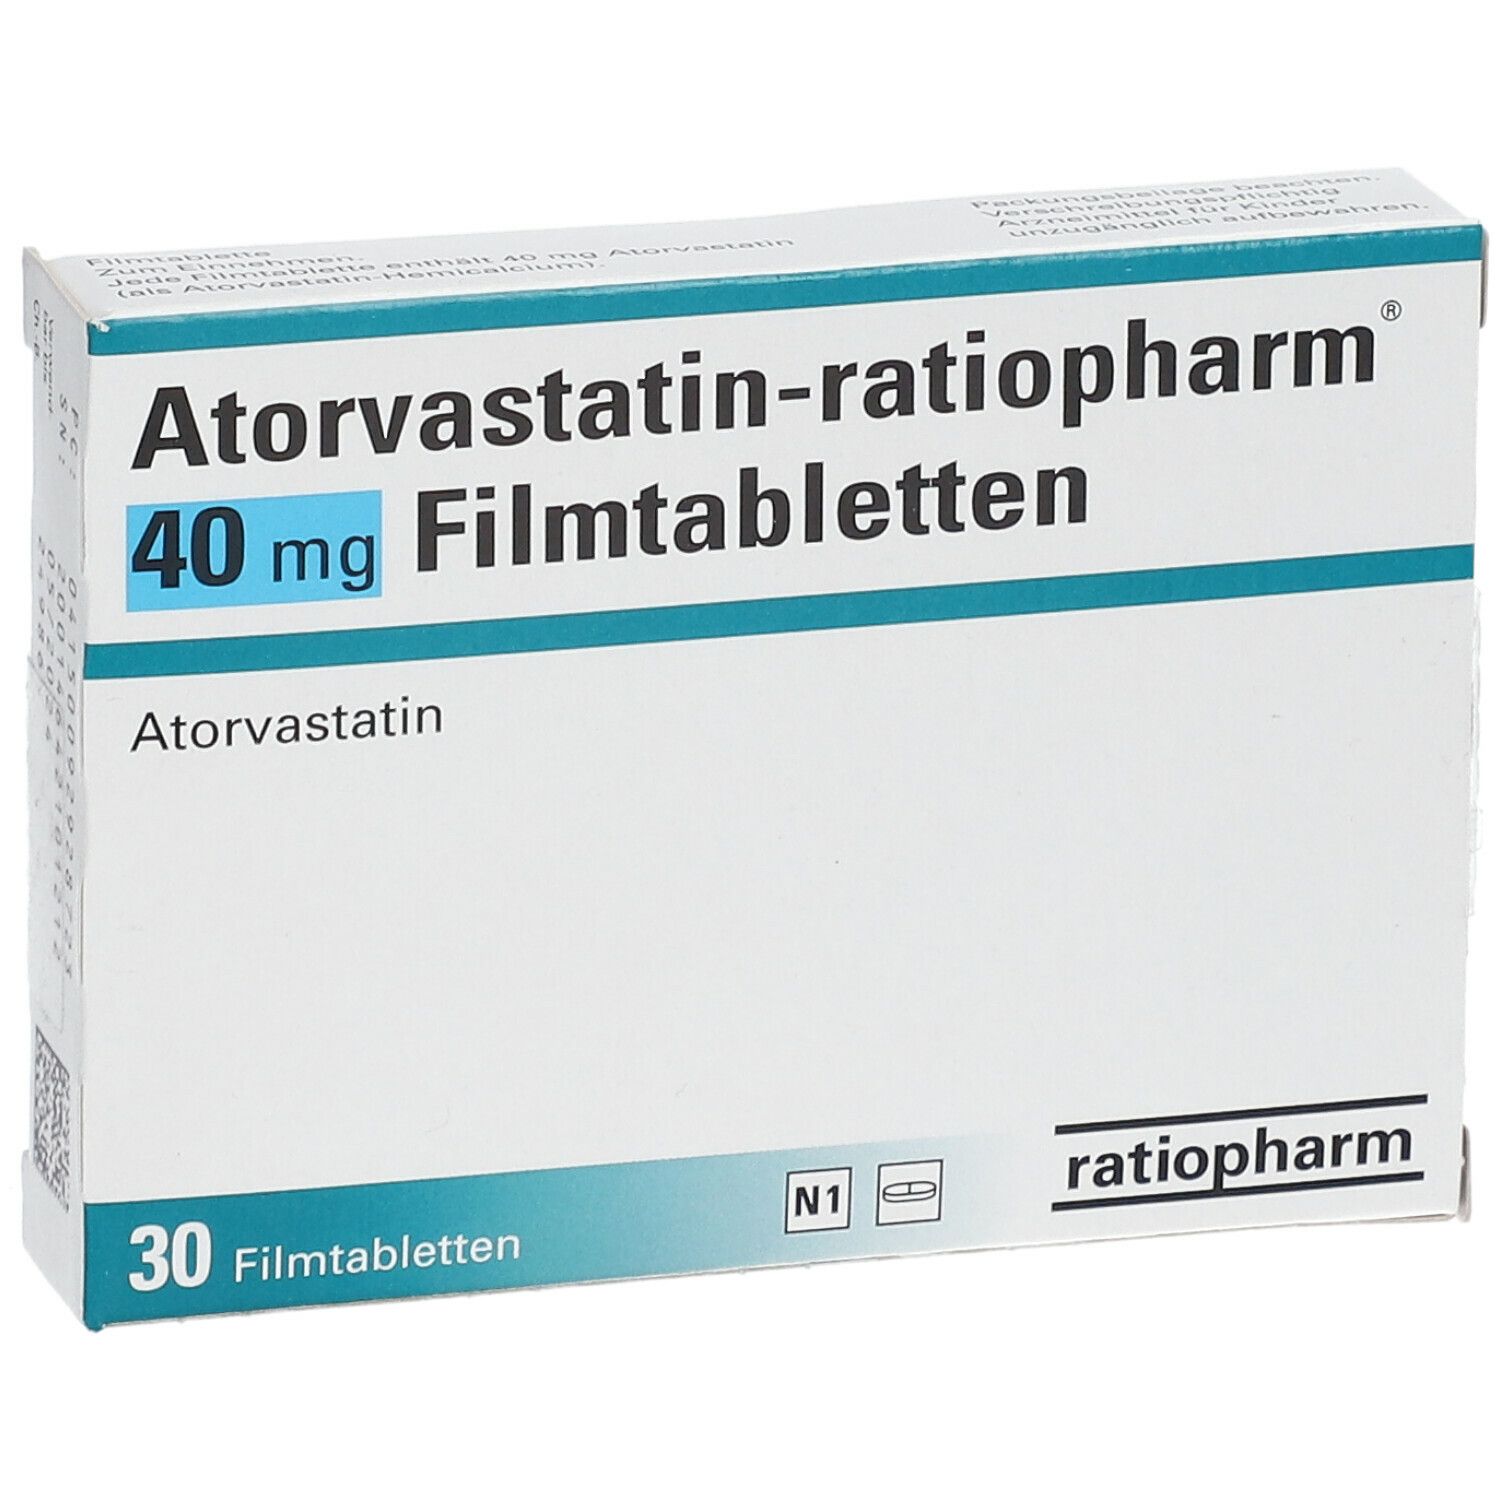 Atorvastatin-ratiopharm® 40 mg